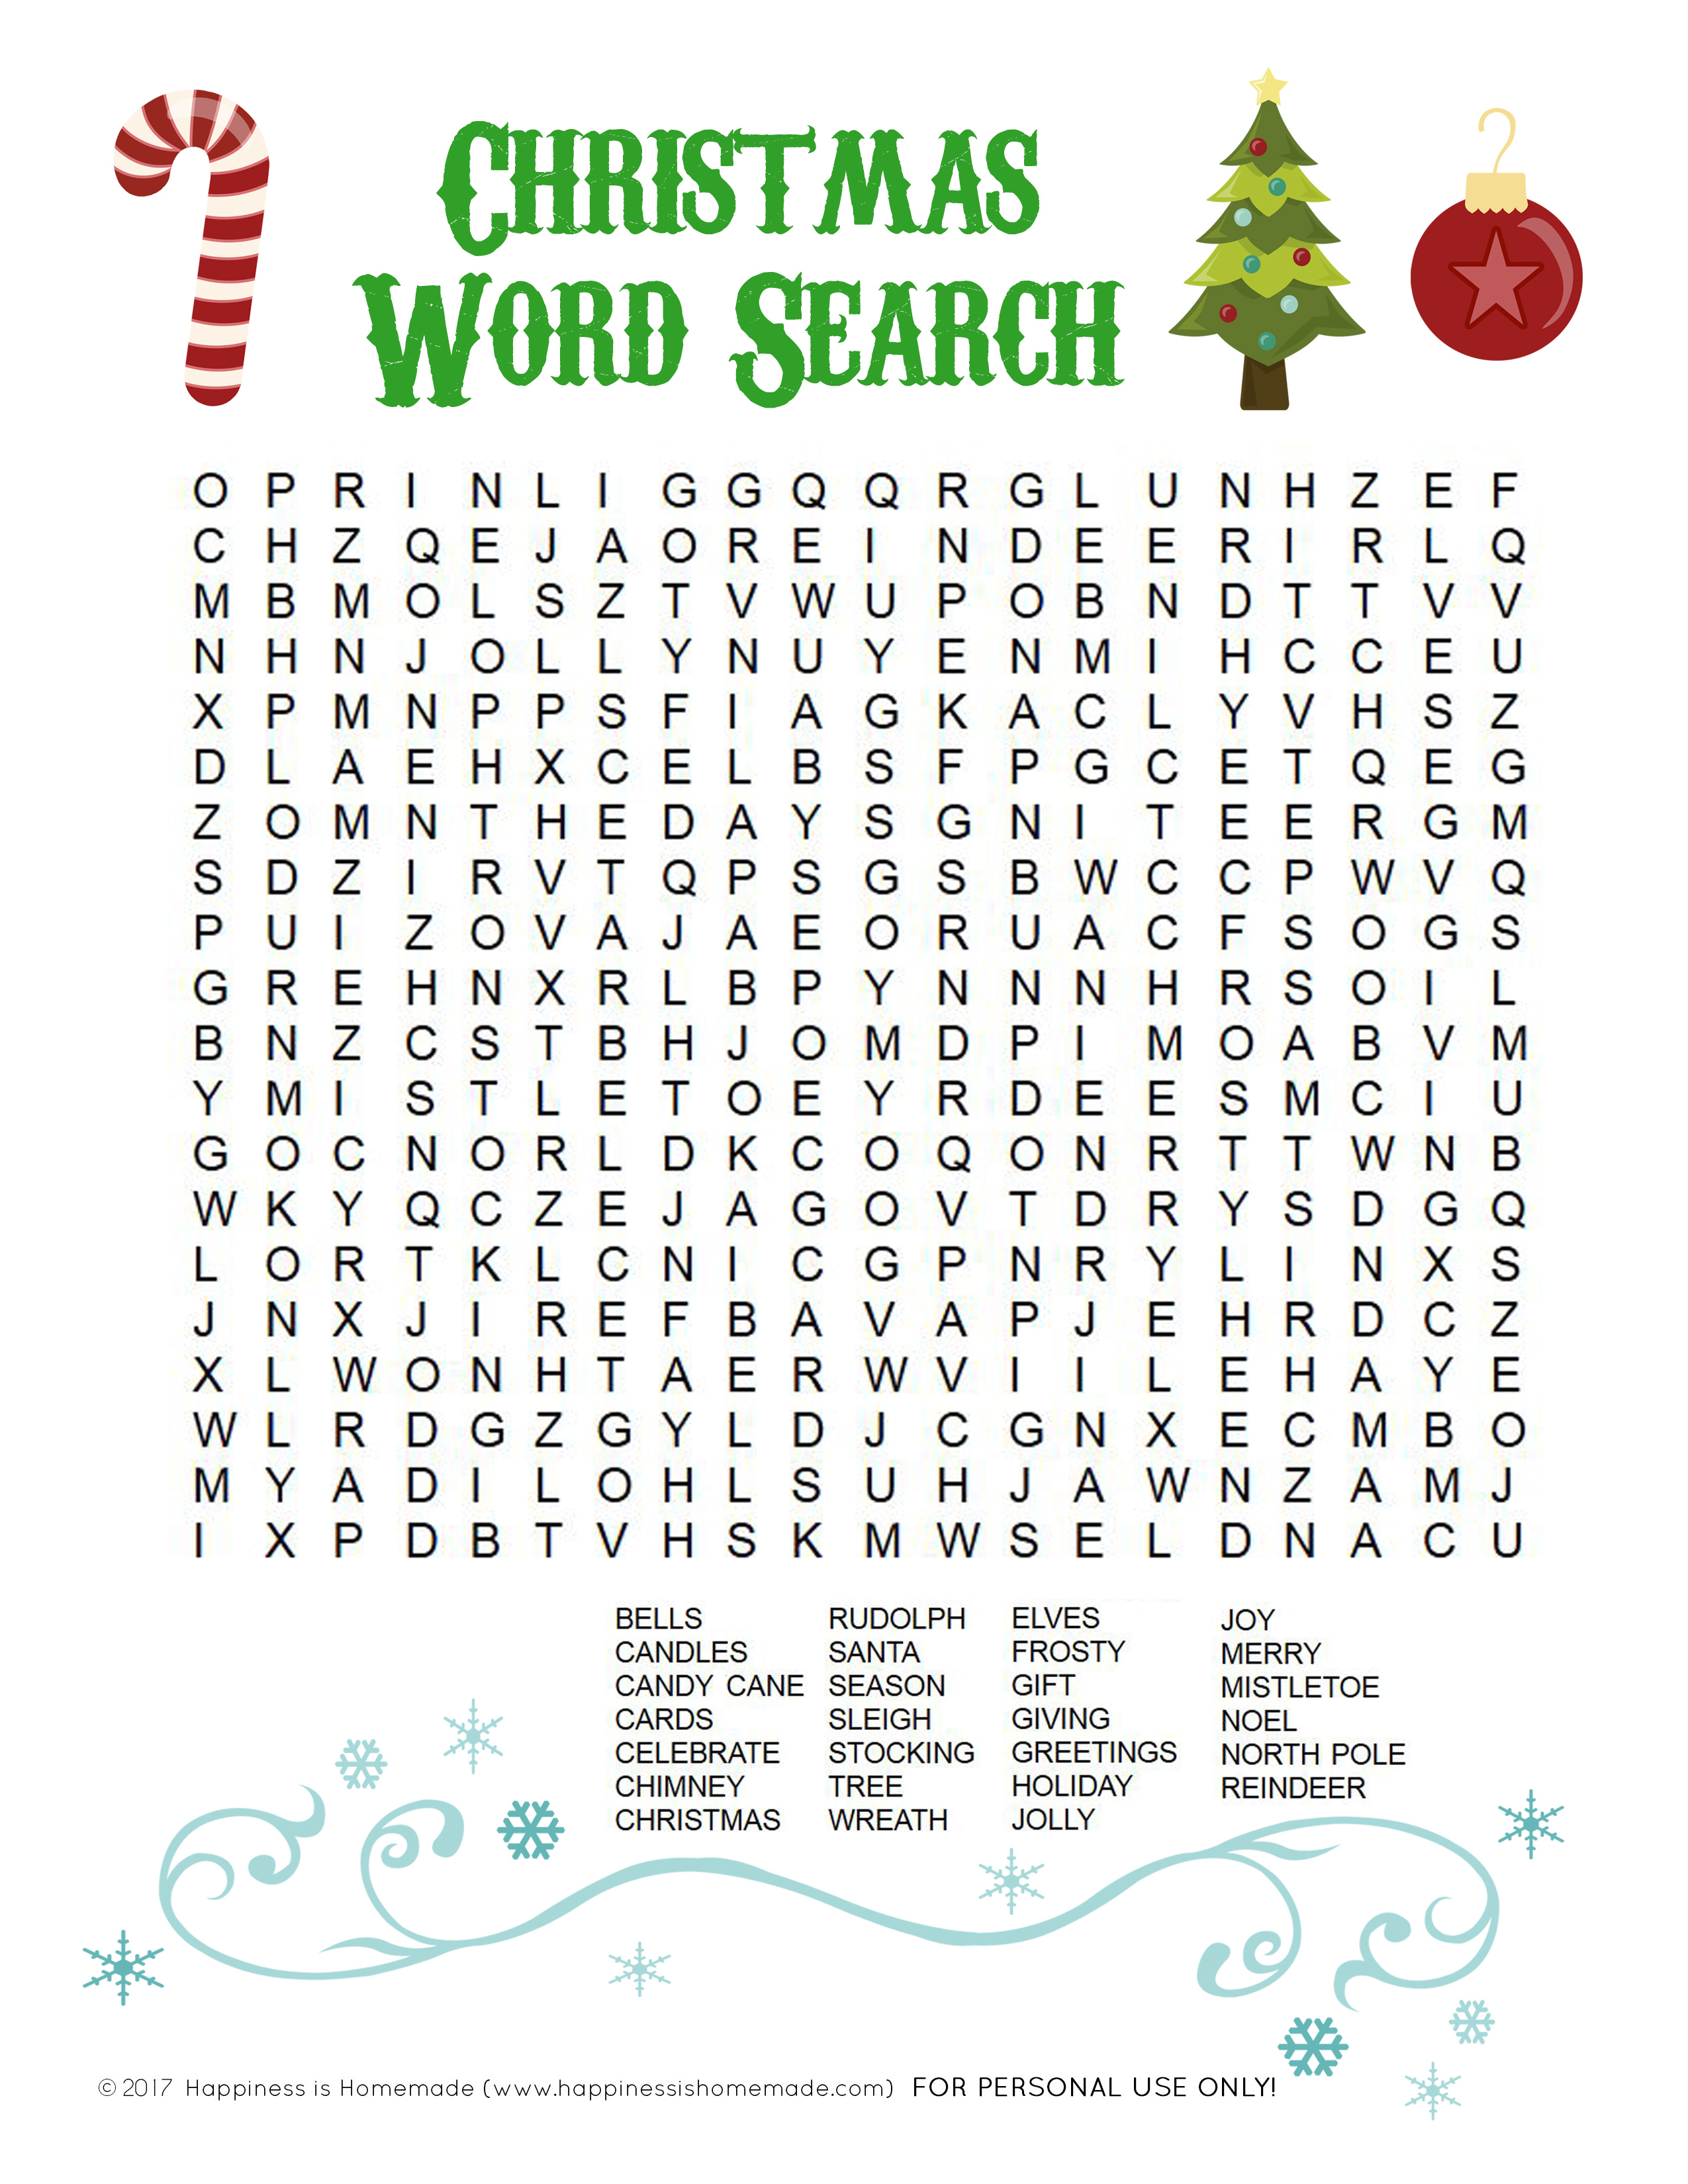 Word search printable